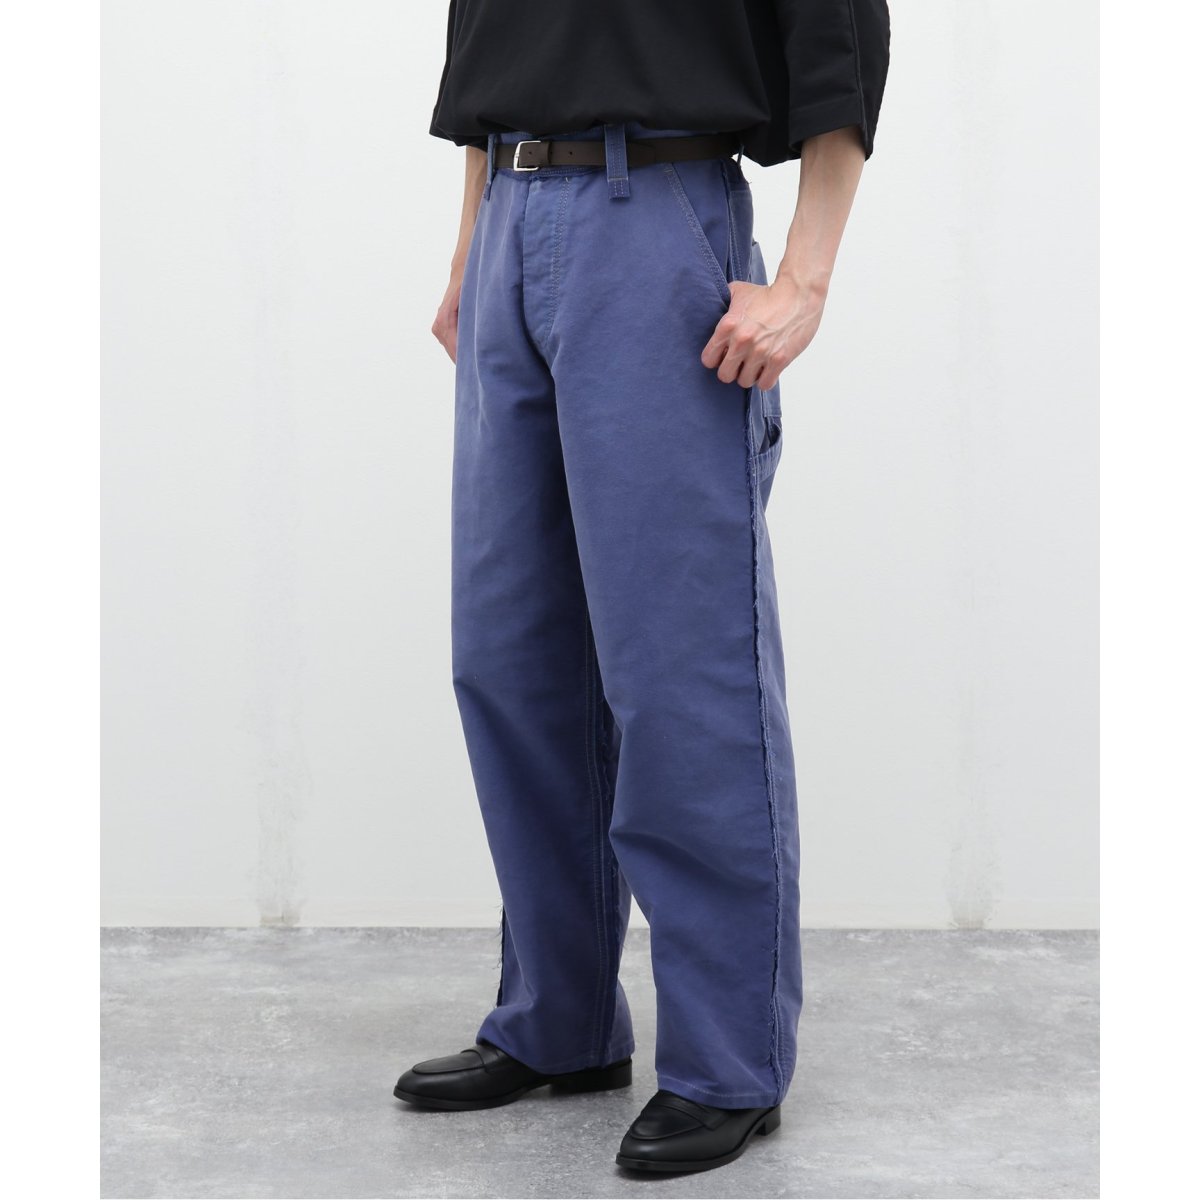 MAISON MARGIELA / メゾン マルジェラ】ageing pants 5 pocket